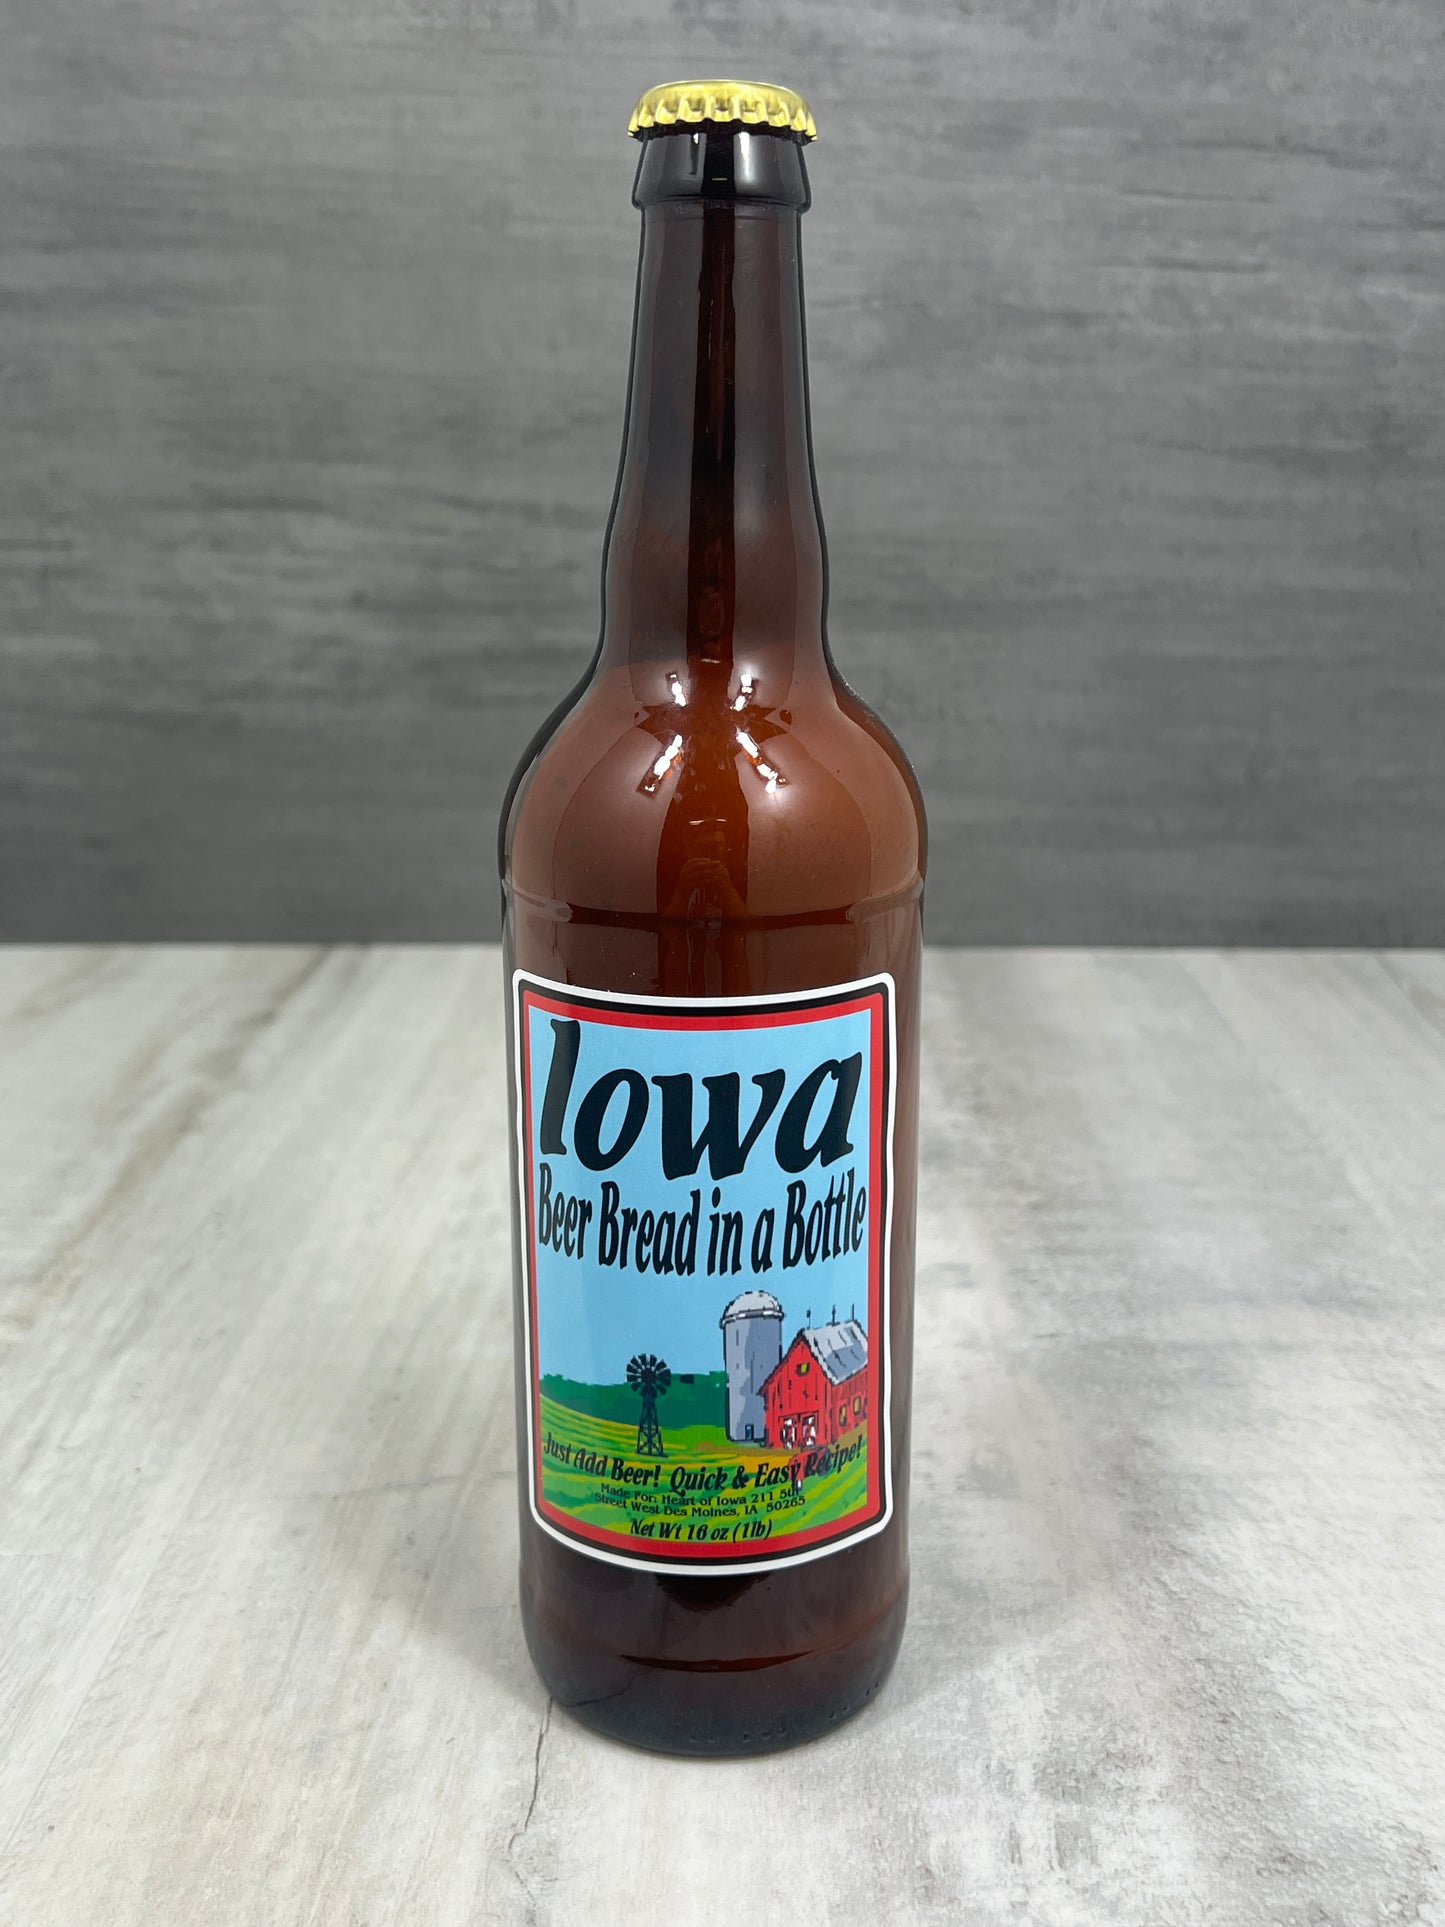 Iowa Beer Bread Bottle